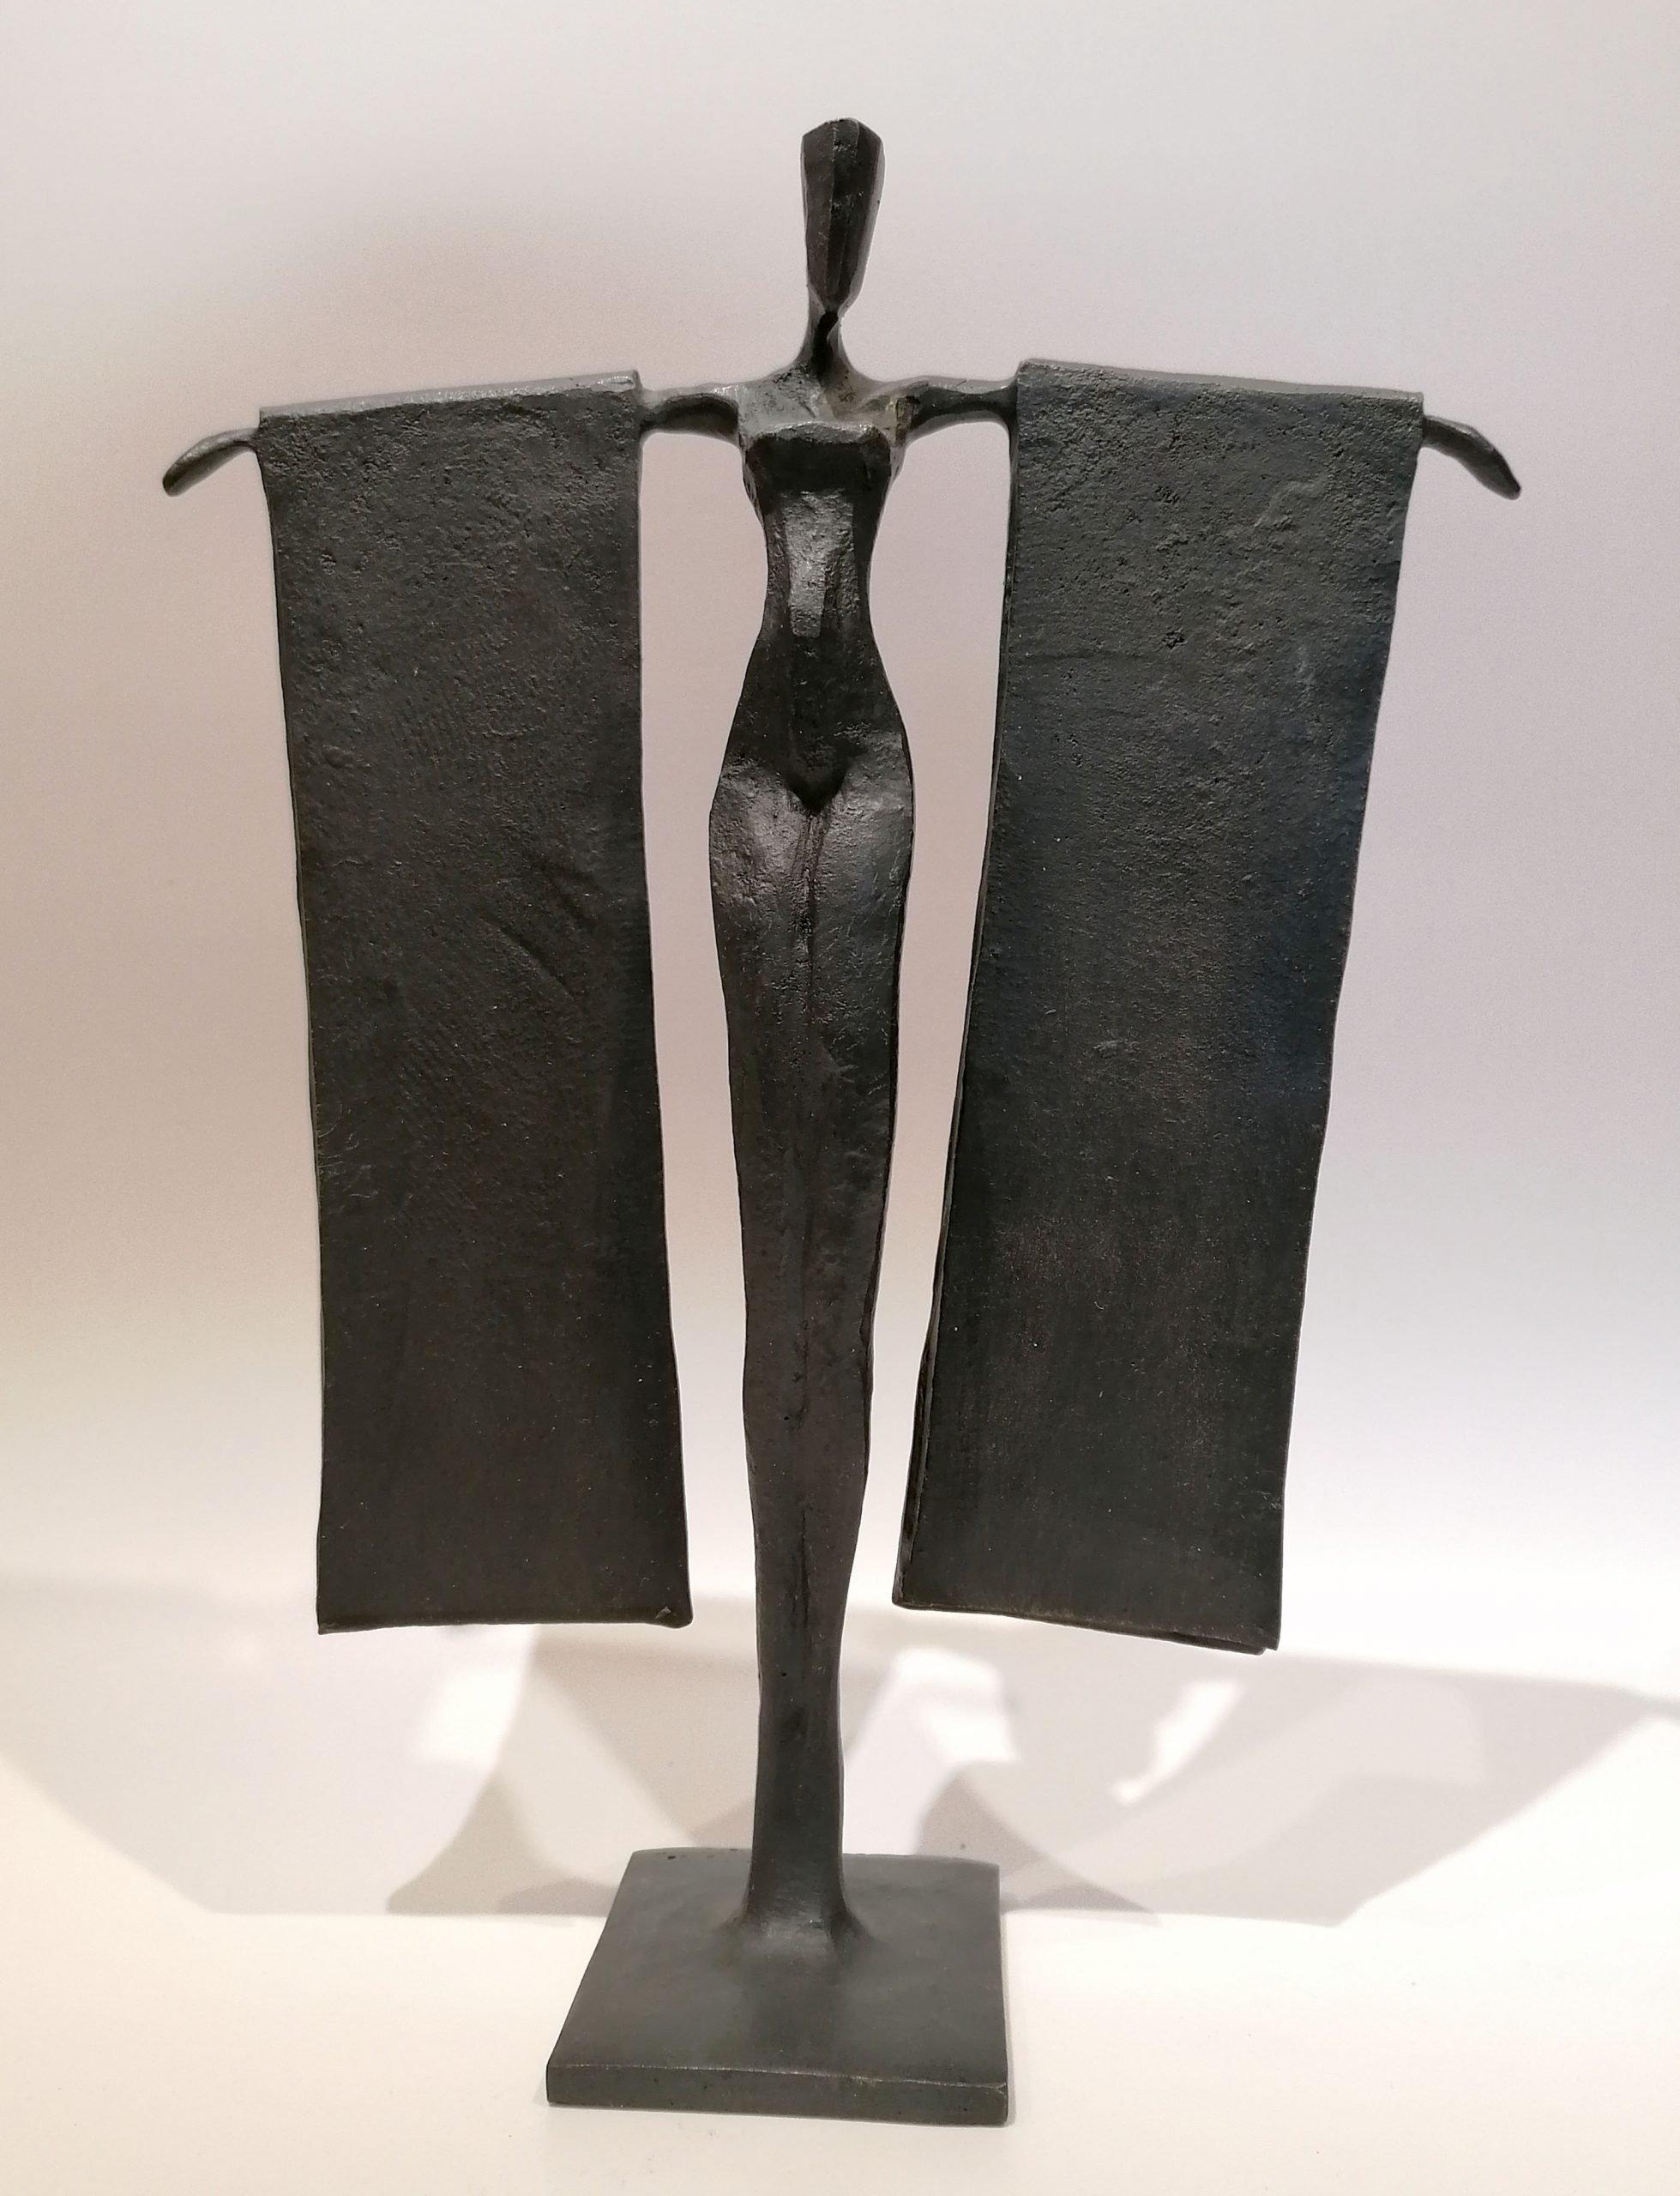 Magdalena l by Nando Kallweit. Bronze sculpture of human figure. Edition of 25 1